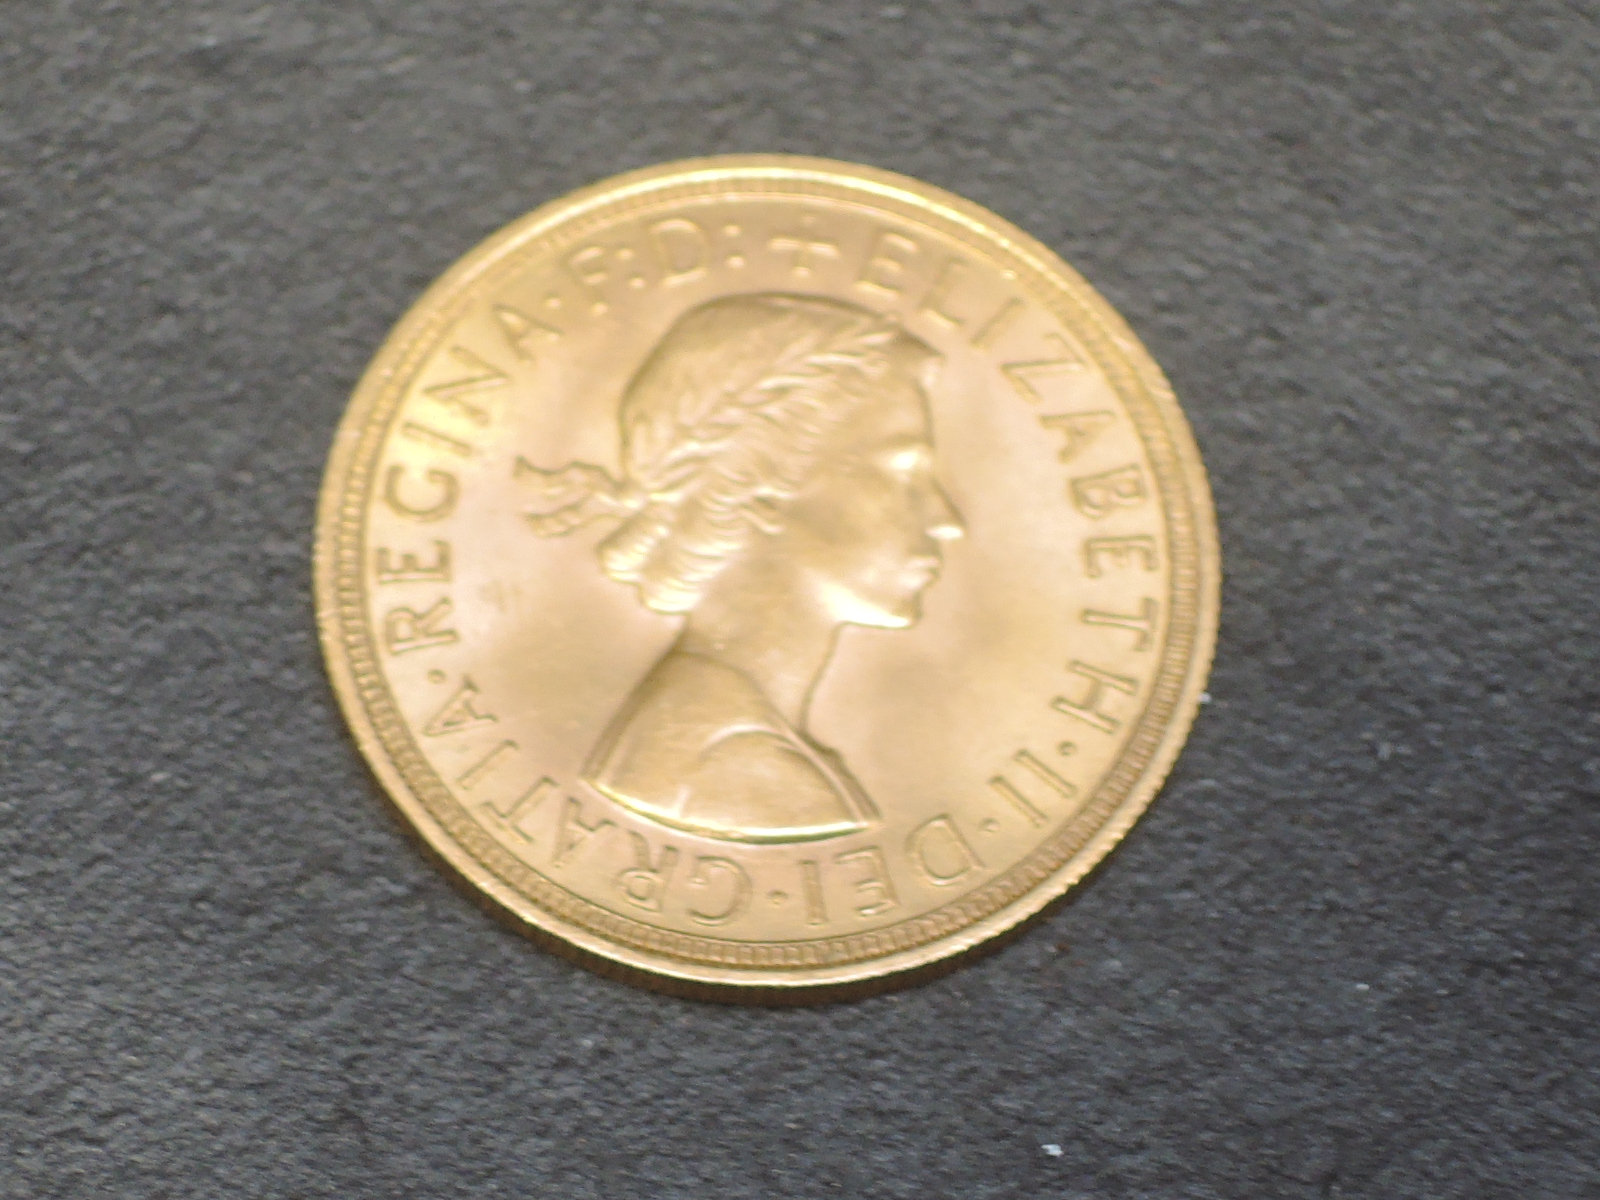 A United Kingdom Royal Mint 1957 Queen Elizabeth II Gold Sovereign - Image 2 of 2